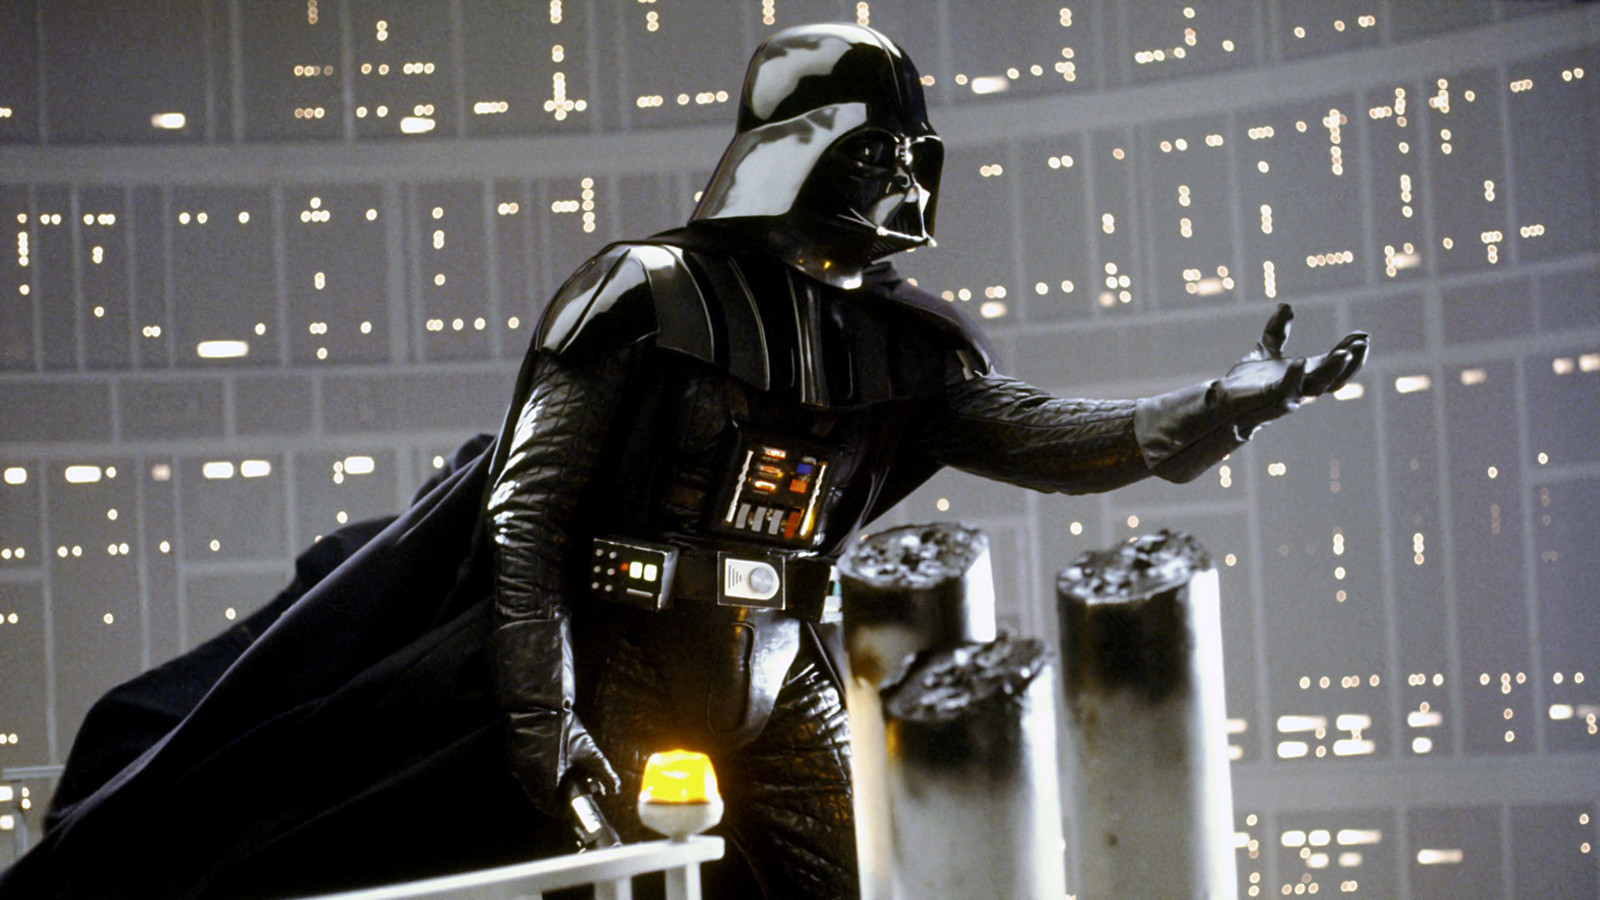 Nice Images Collection: Star Wars Episode V: The Empire Strikes Back Desktop Wallpapers